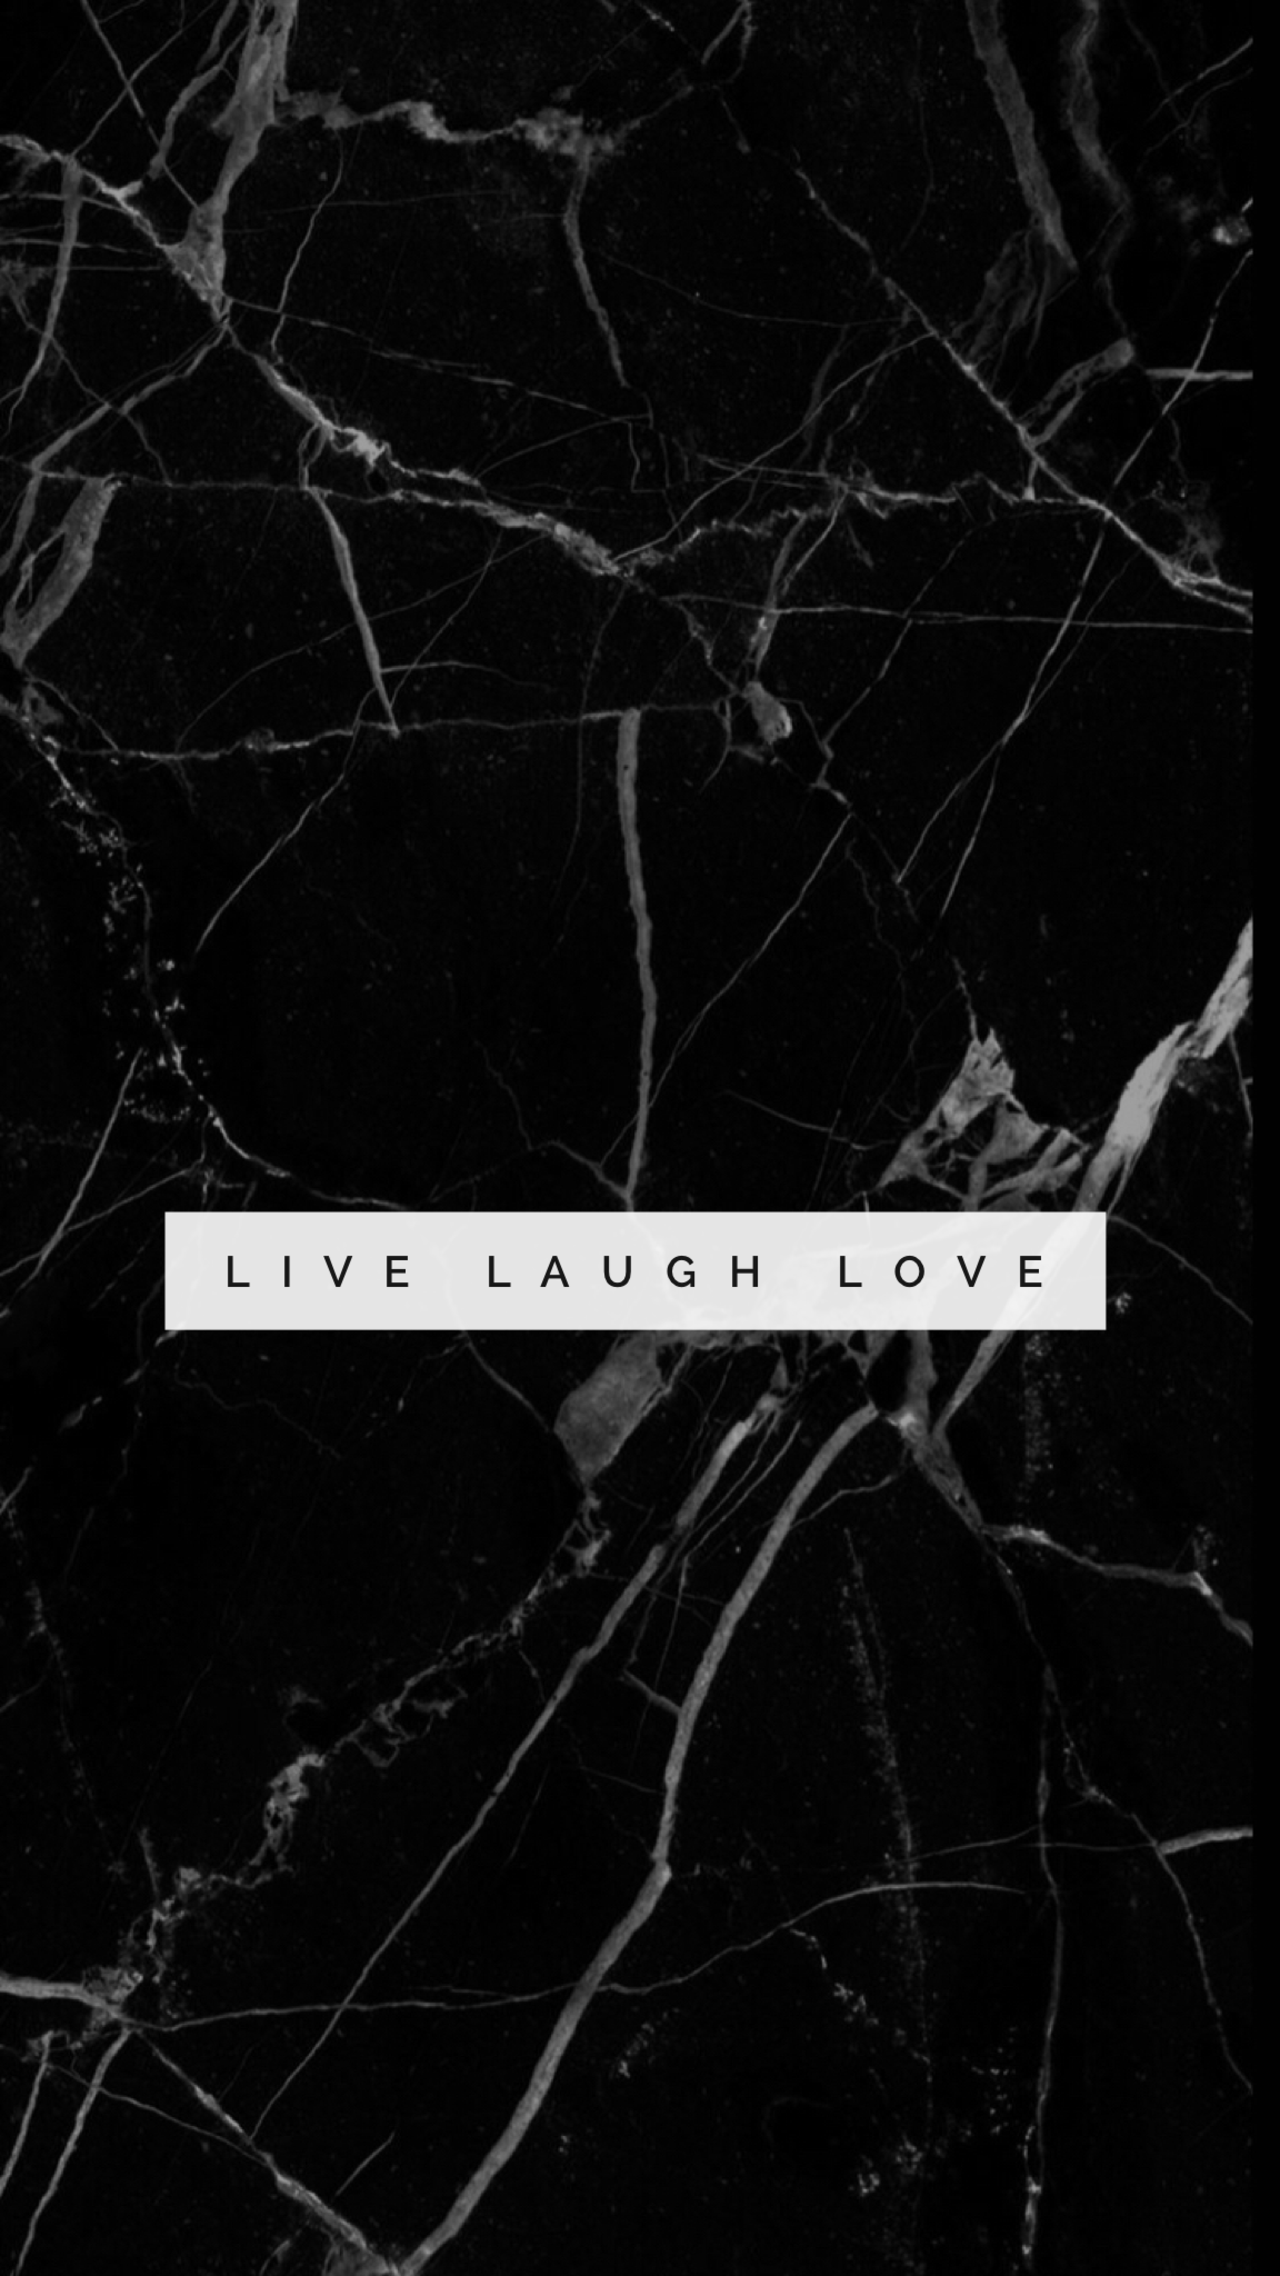 Live laugh love wallpaper, black marble